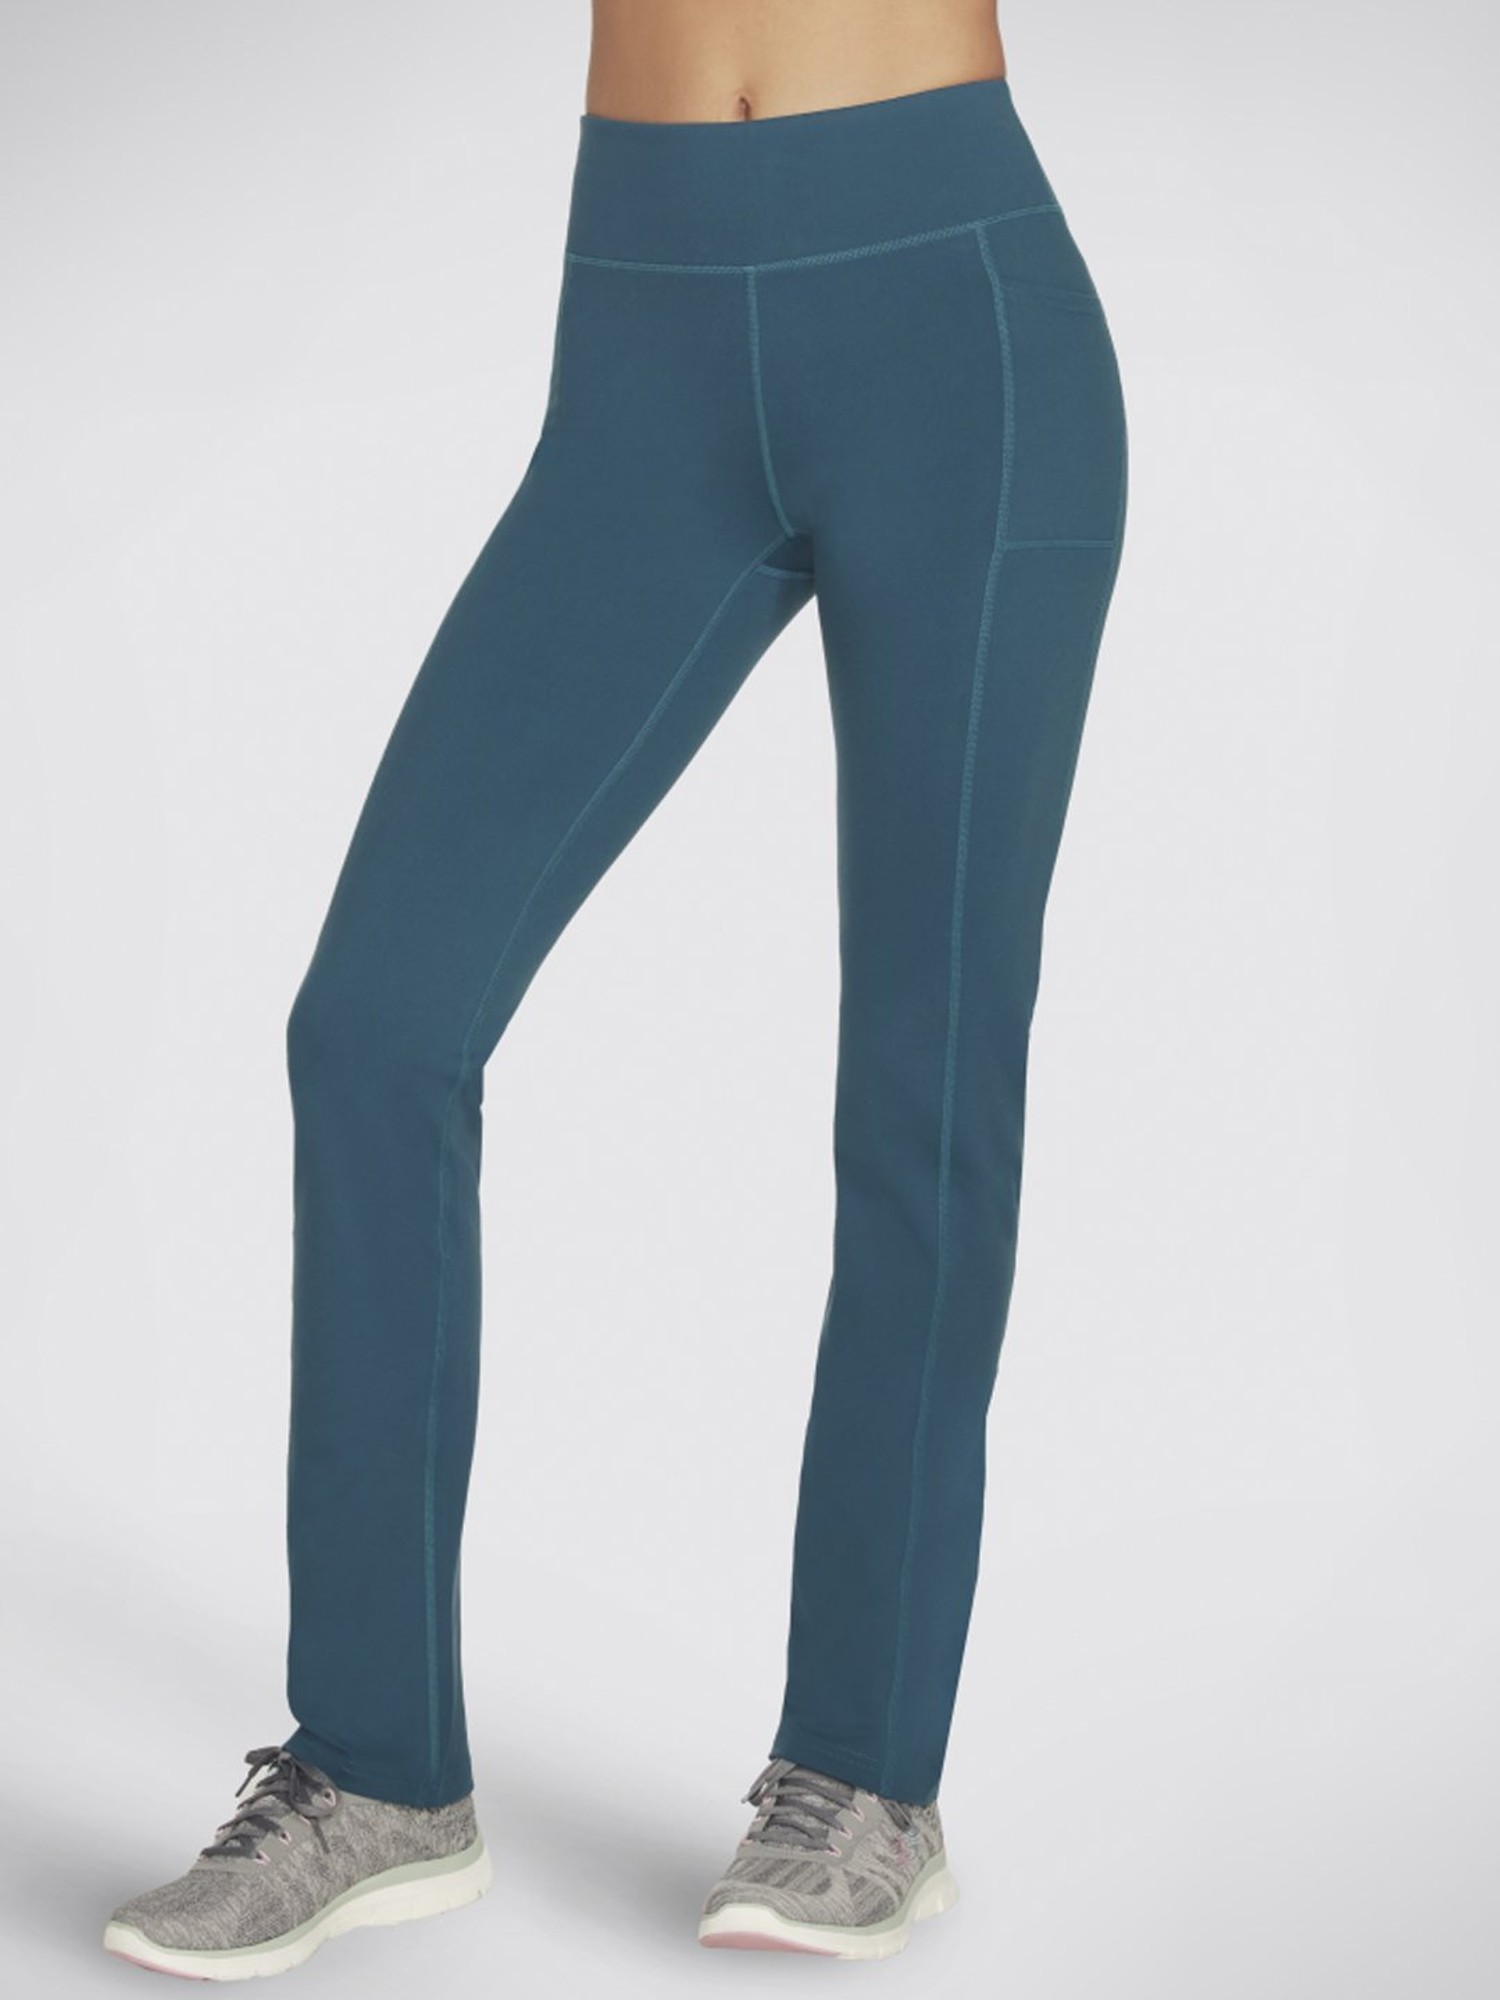 Buy Skechers Teal Green High Rise Track Pants for Women Online